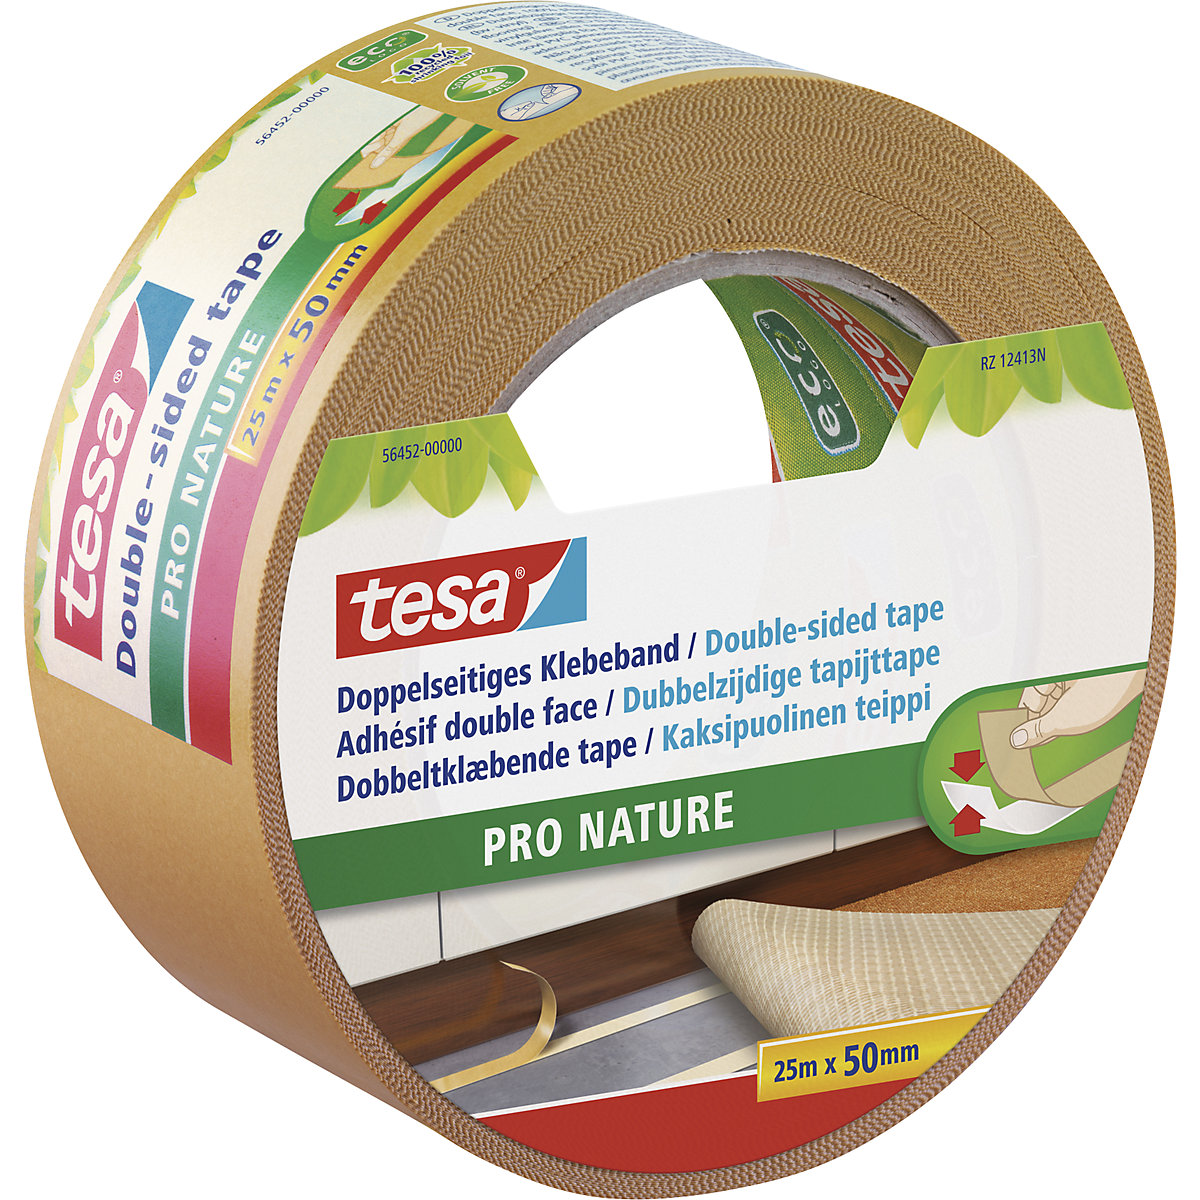 Double sided adhesive tape – tesa